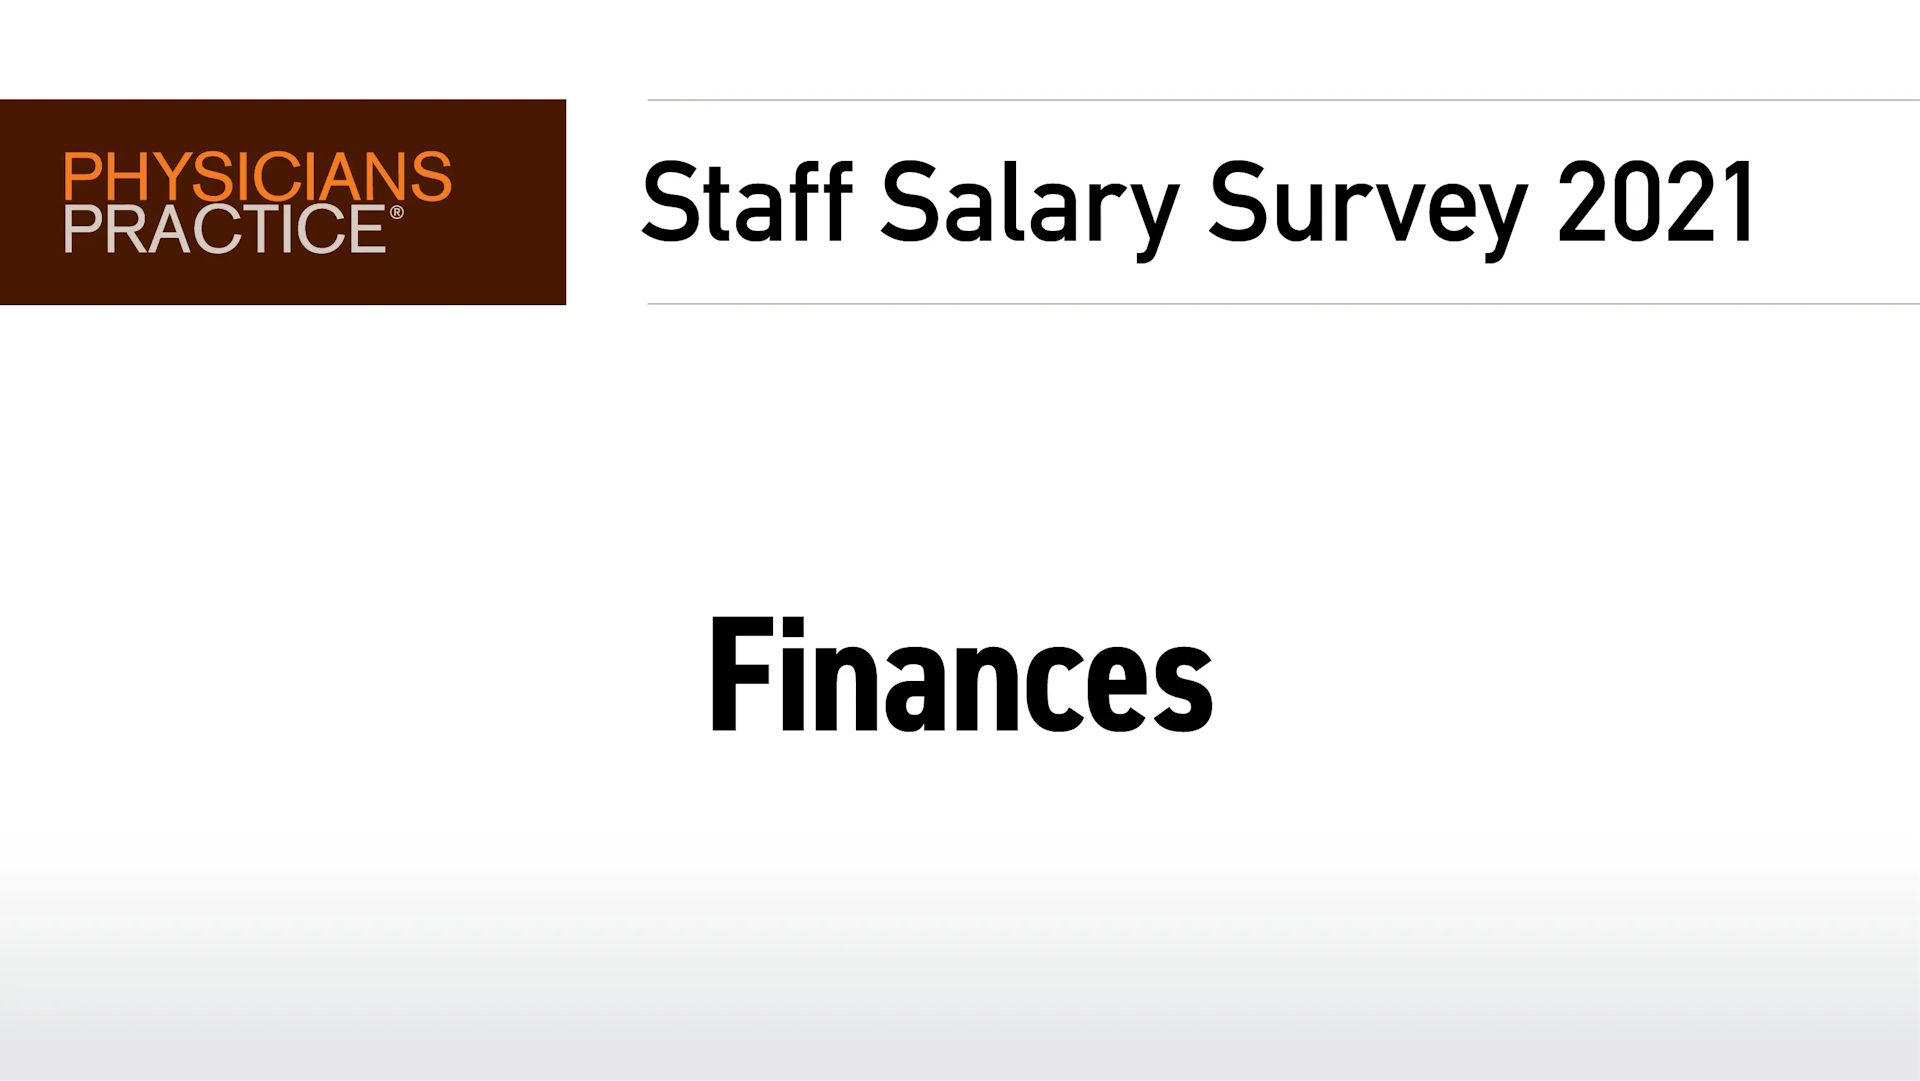 Staff Salary Survey 2021: Finances